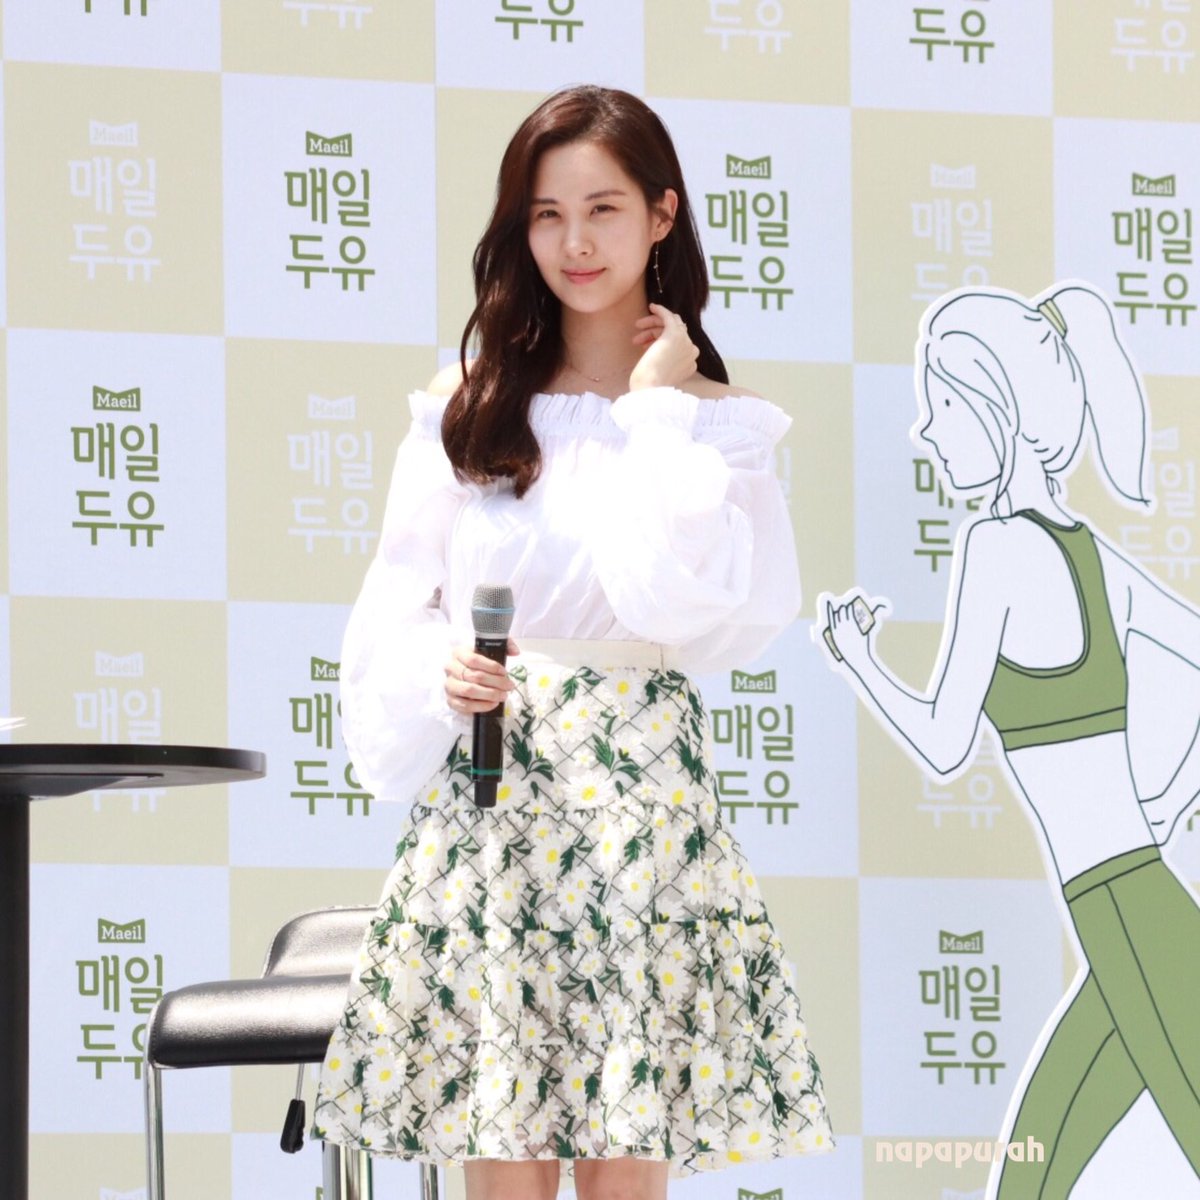  [PIC][03-06-2017]SeoHyun tham dự sự kiện “City Forestival - Maeil Duyou 'Confidence Diary'” vào chiều nay - Page 2 DBYPrvAUwAAn_Pb